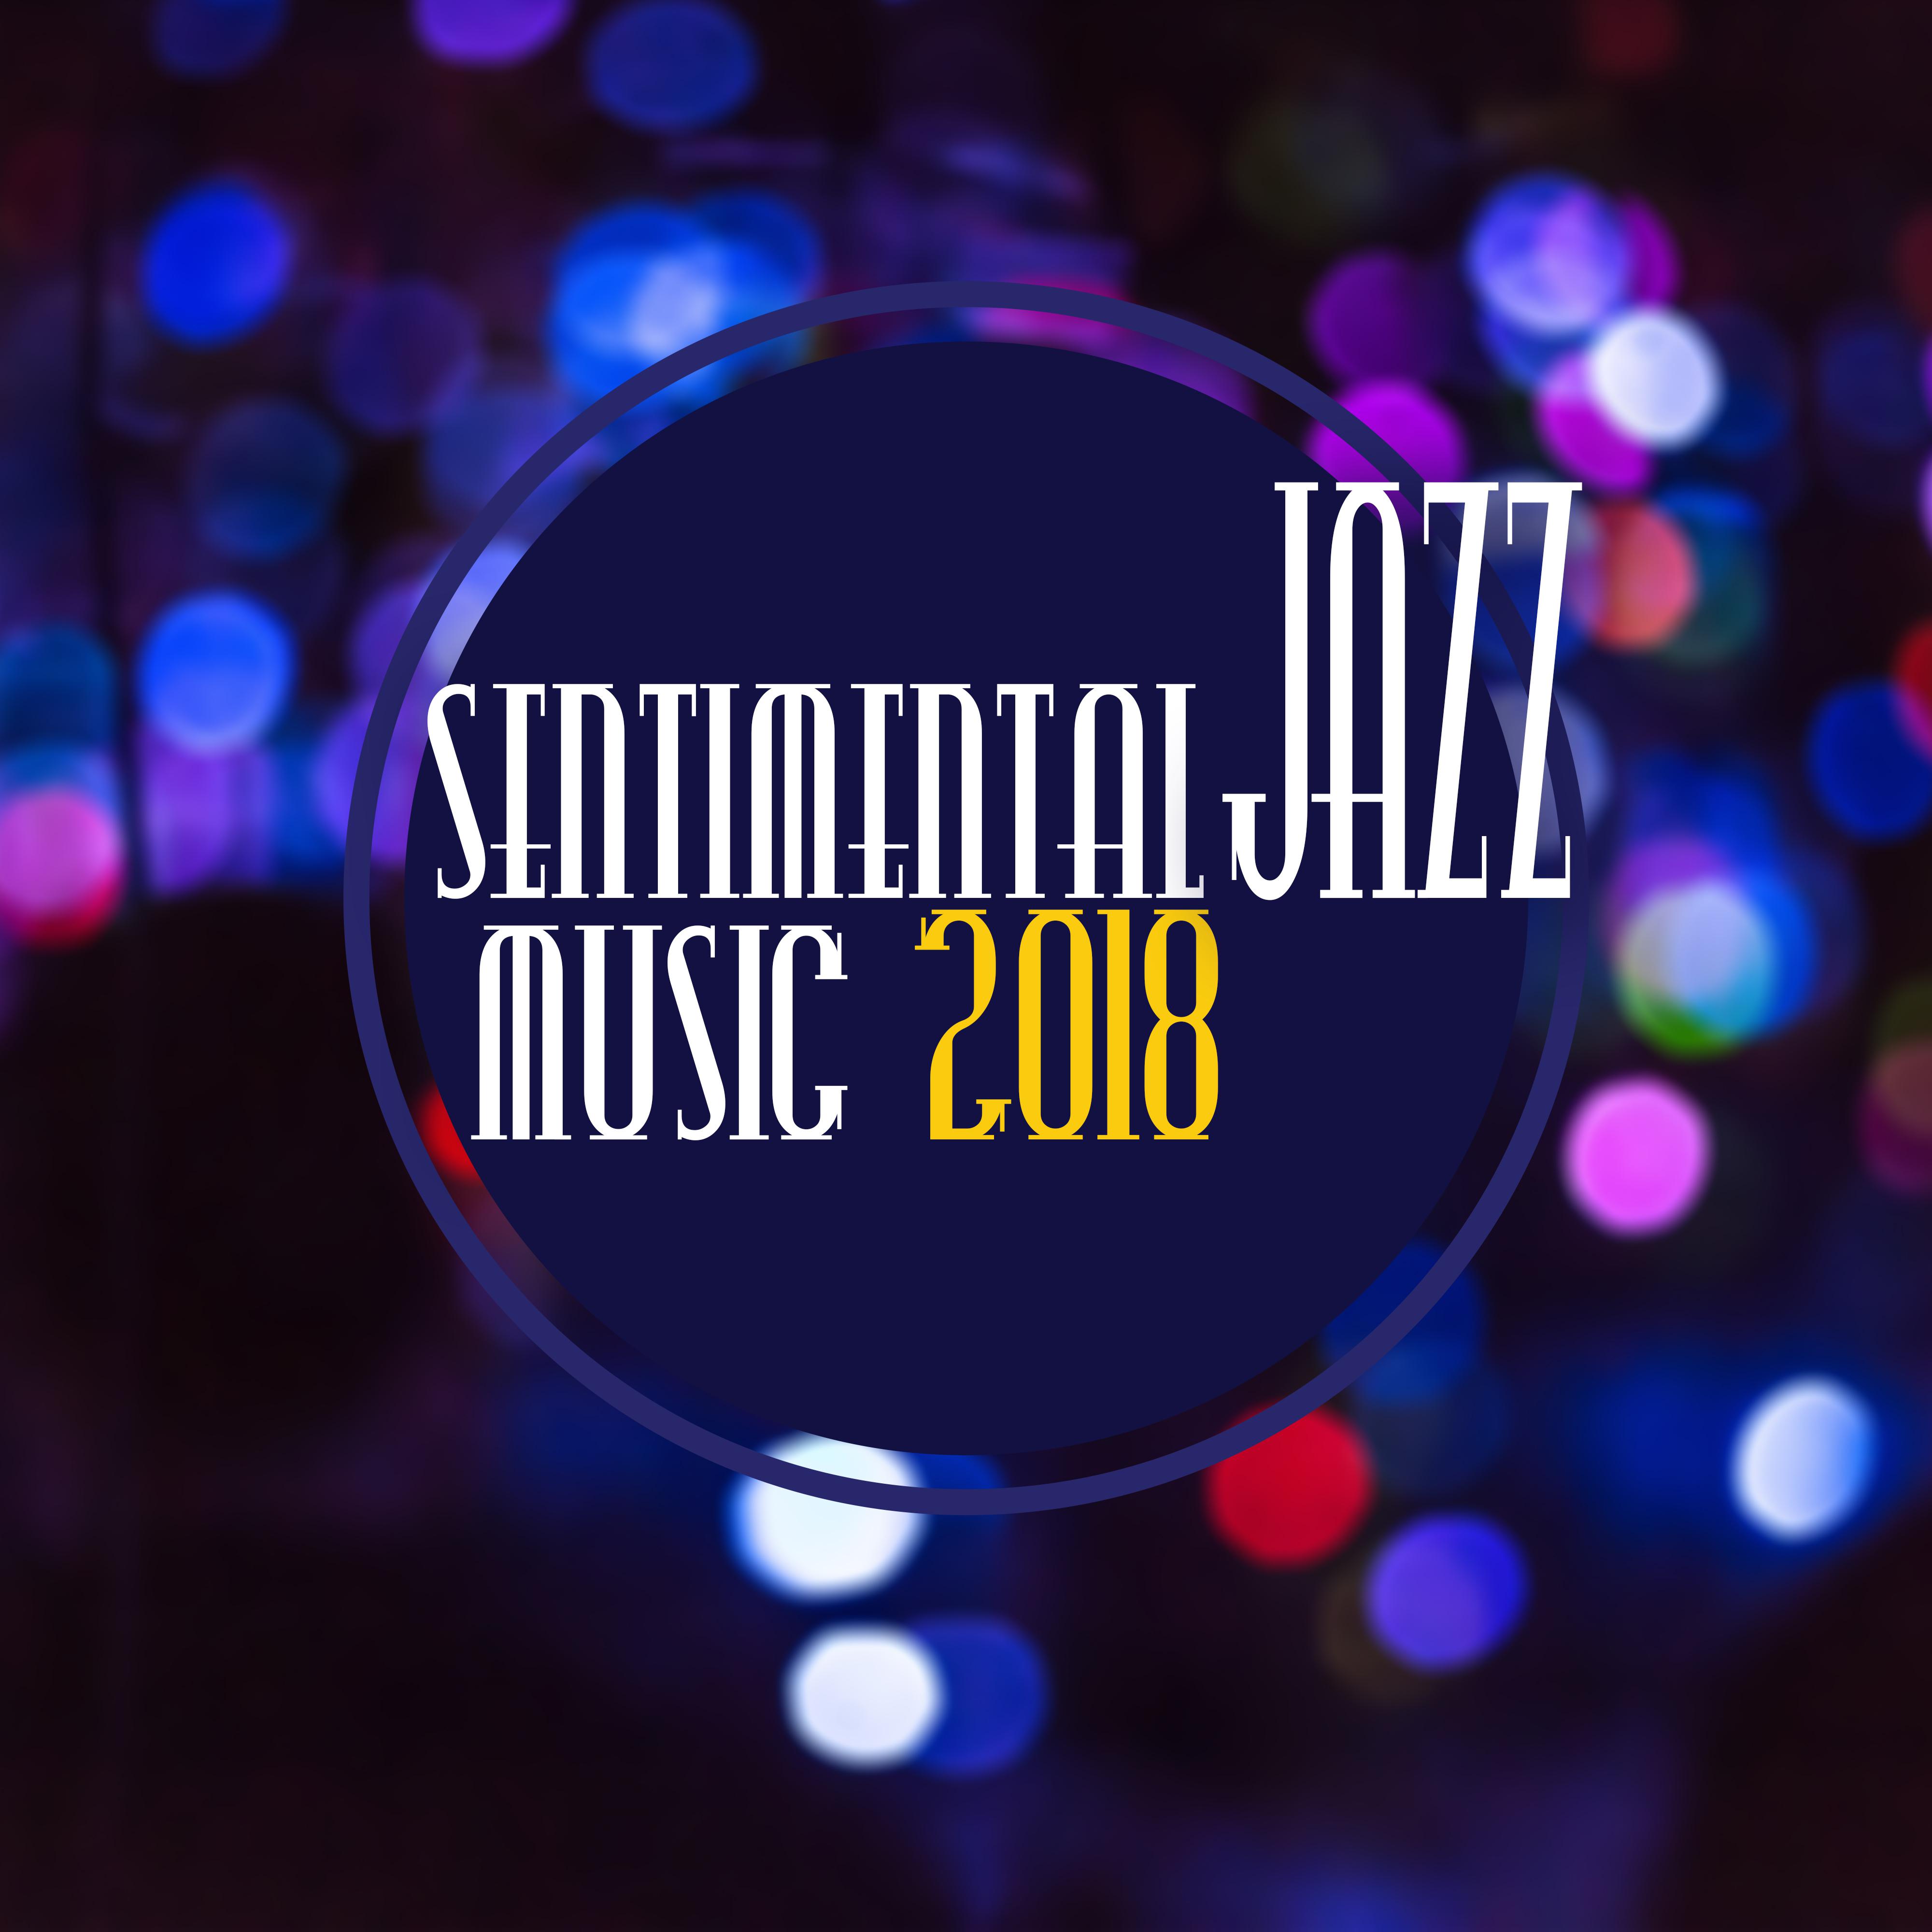 Sentimental Jazz Music 2018